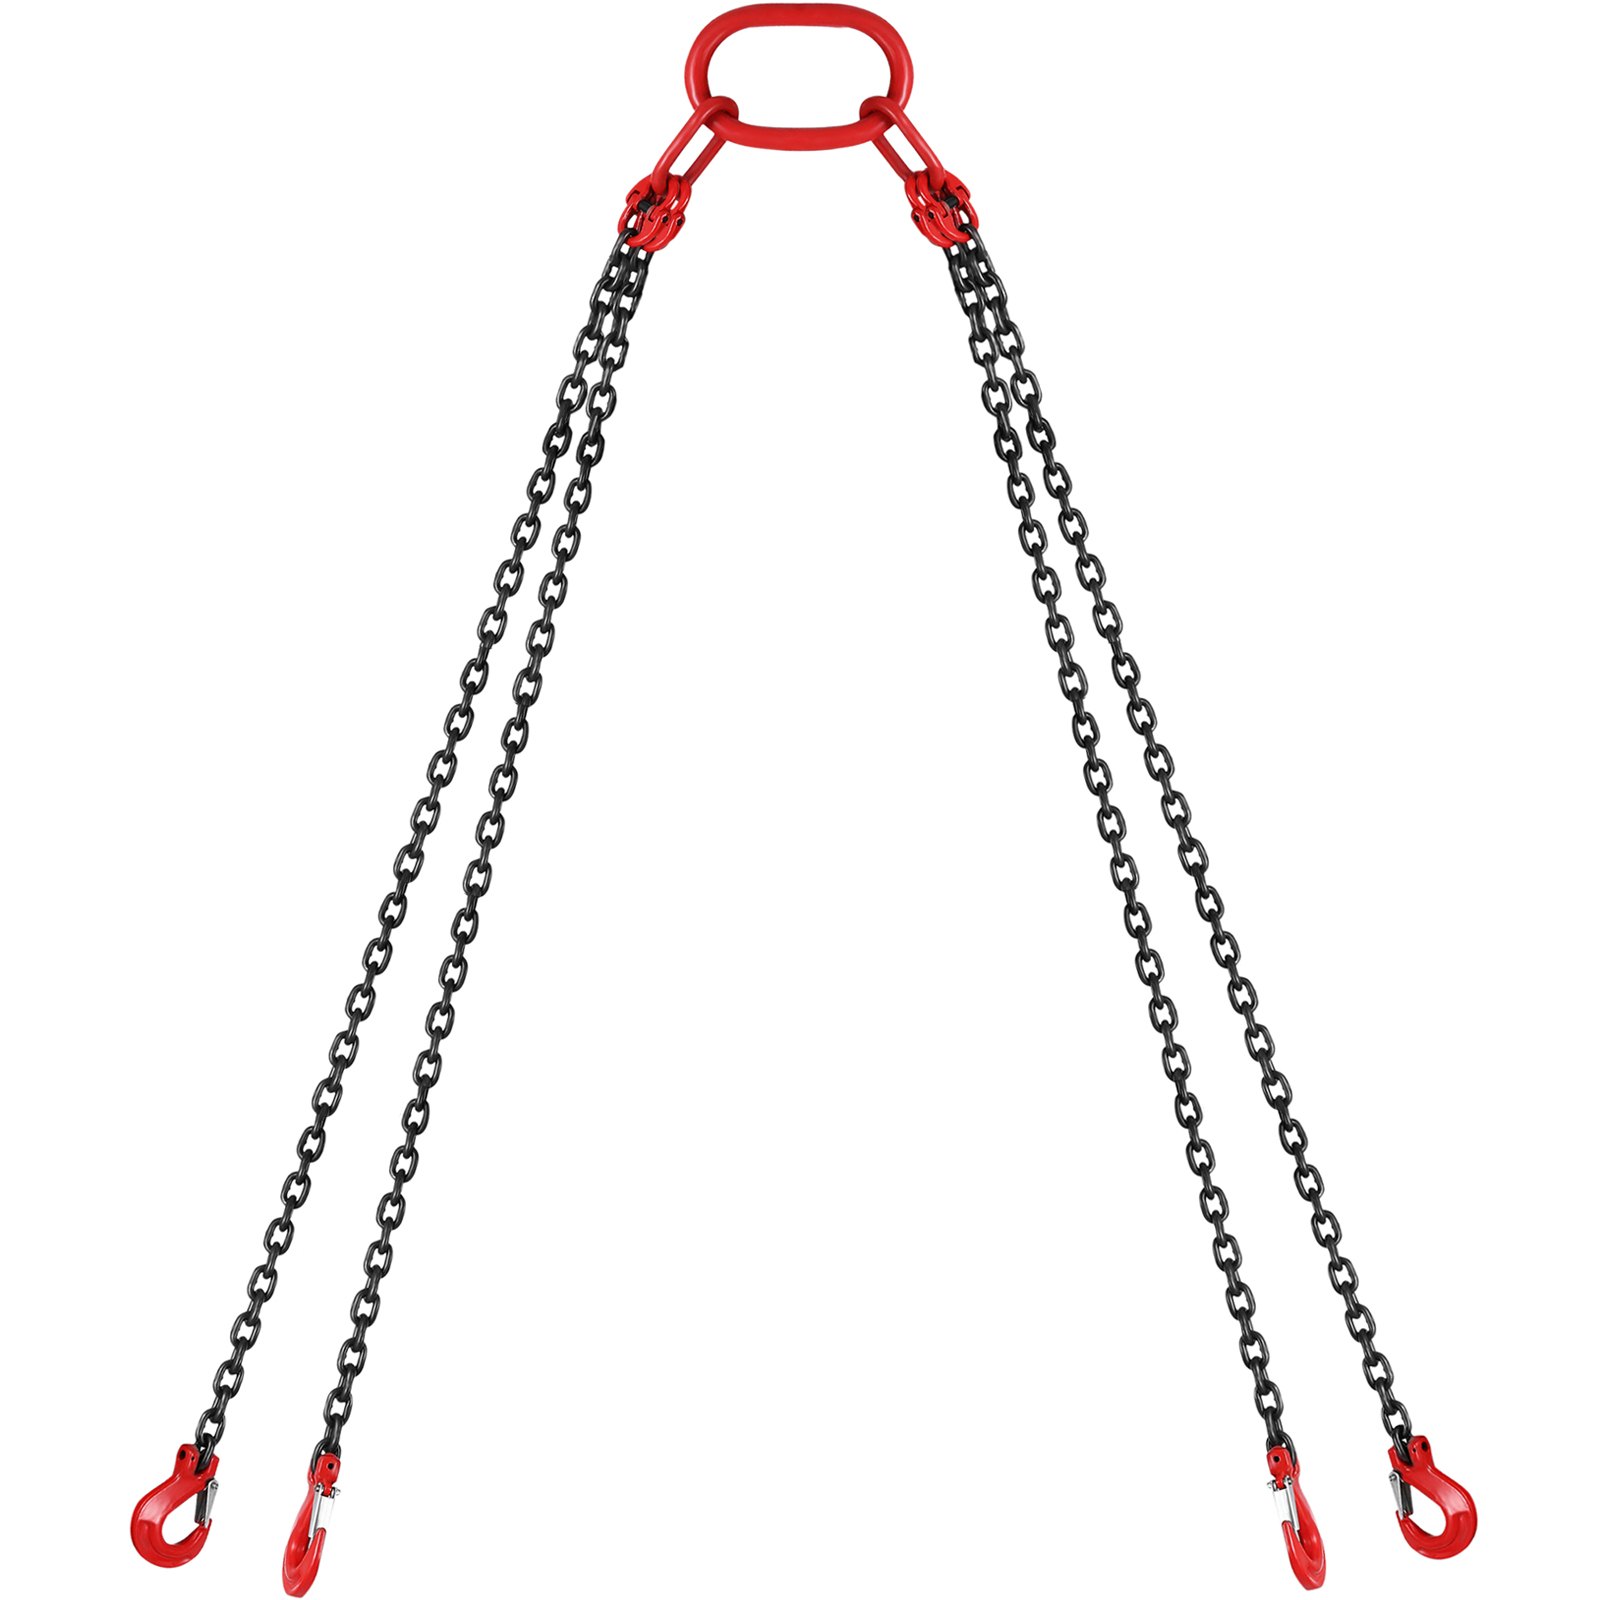 FTB-5000D Lifting chains kit